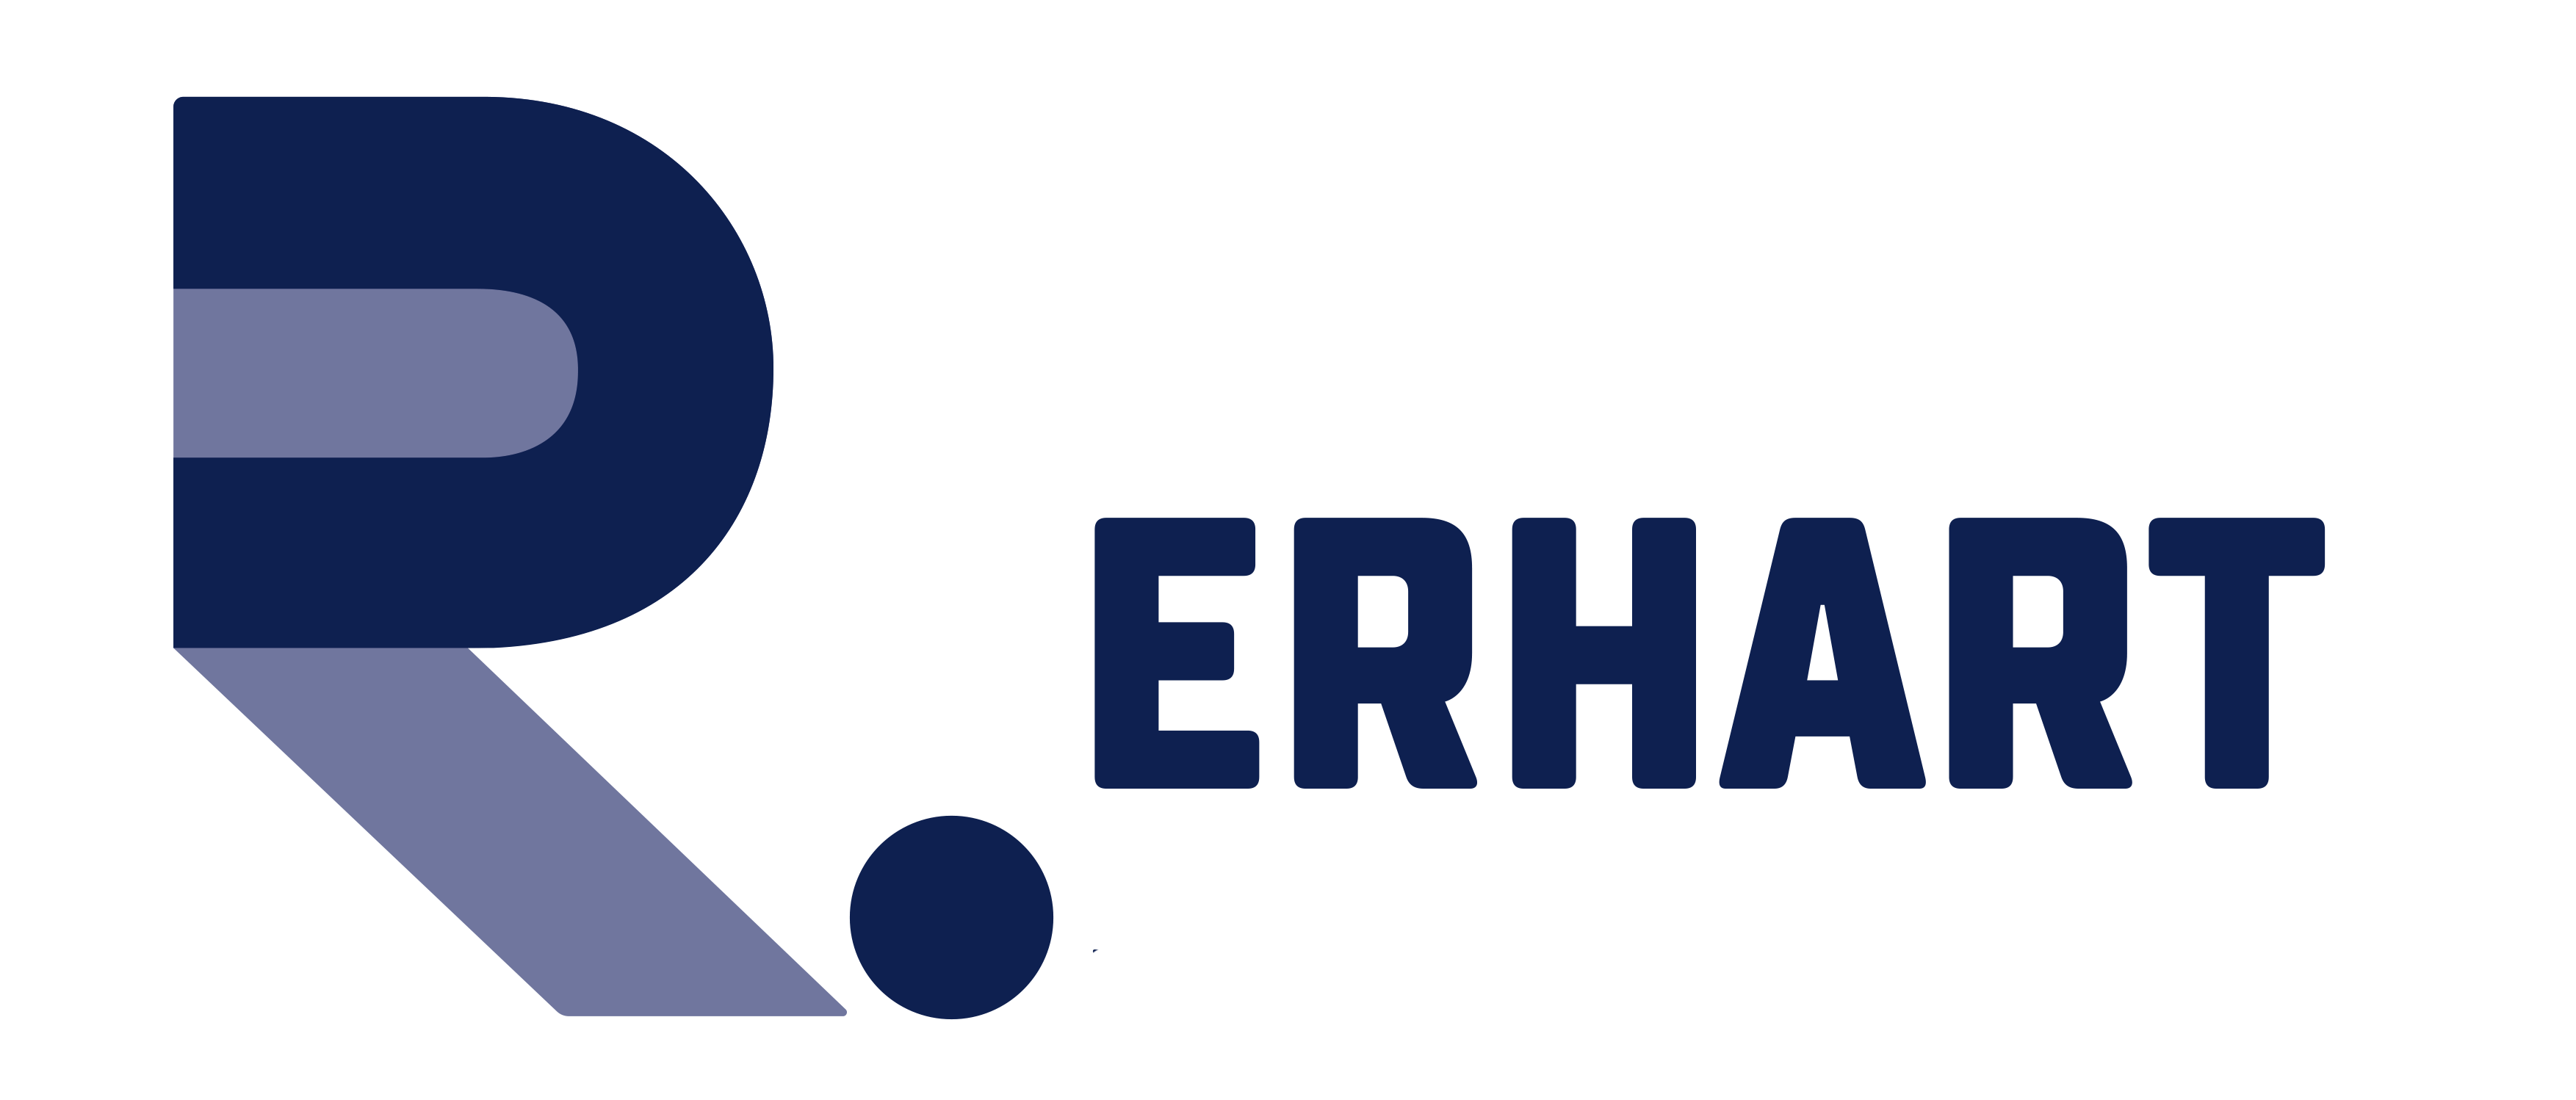 Dr. Erhart GmbH - Steuerberatung